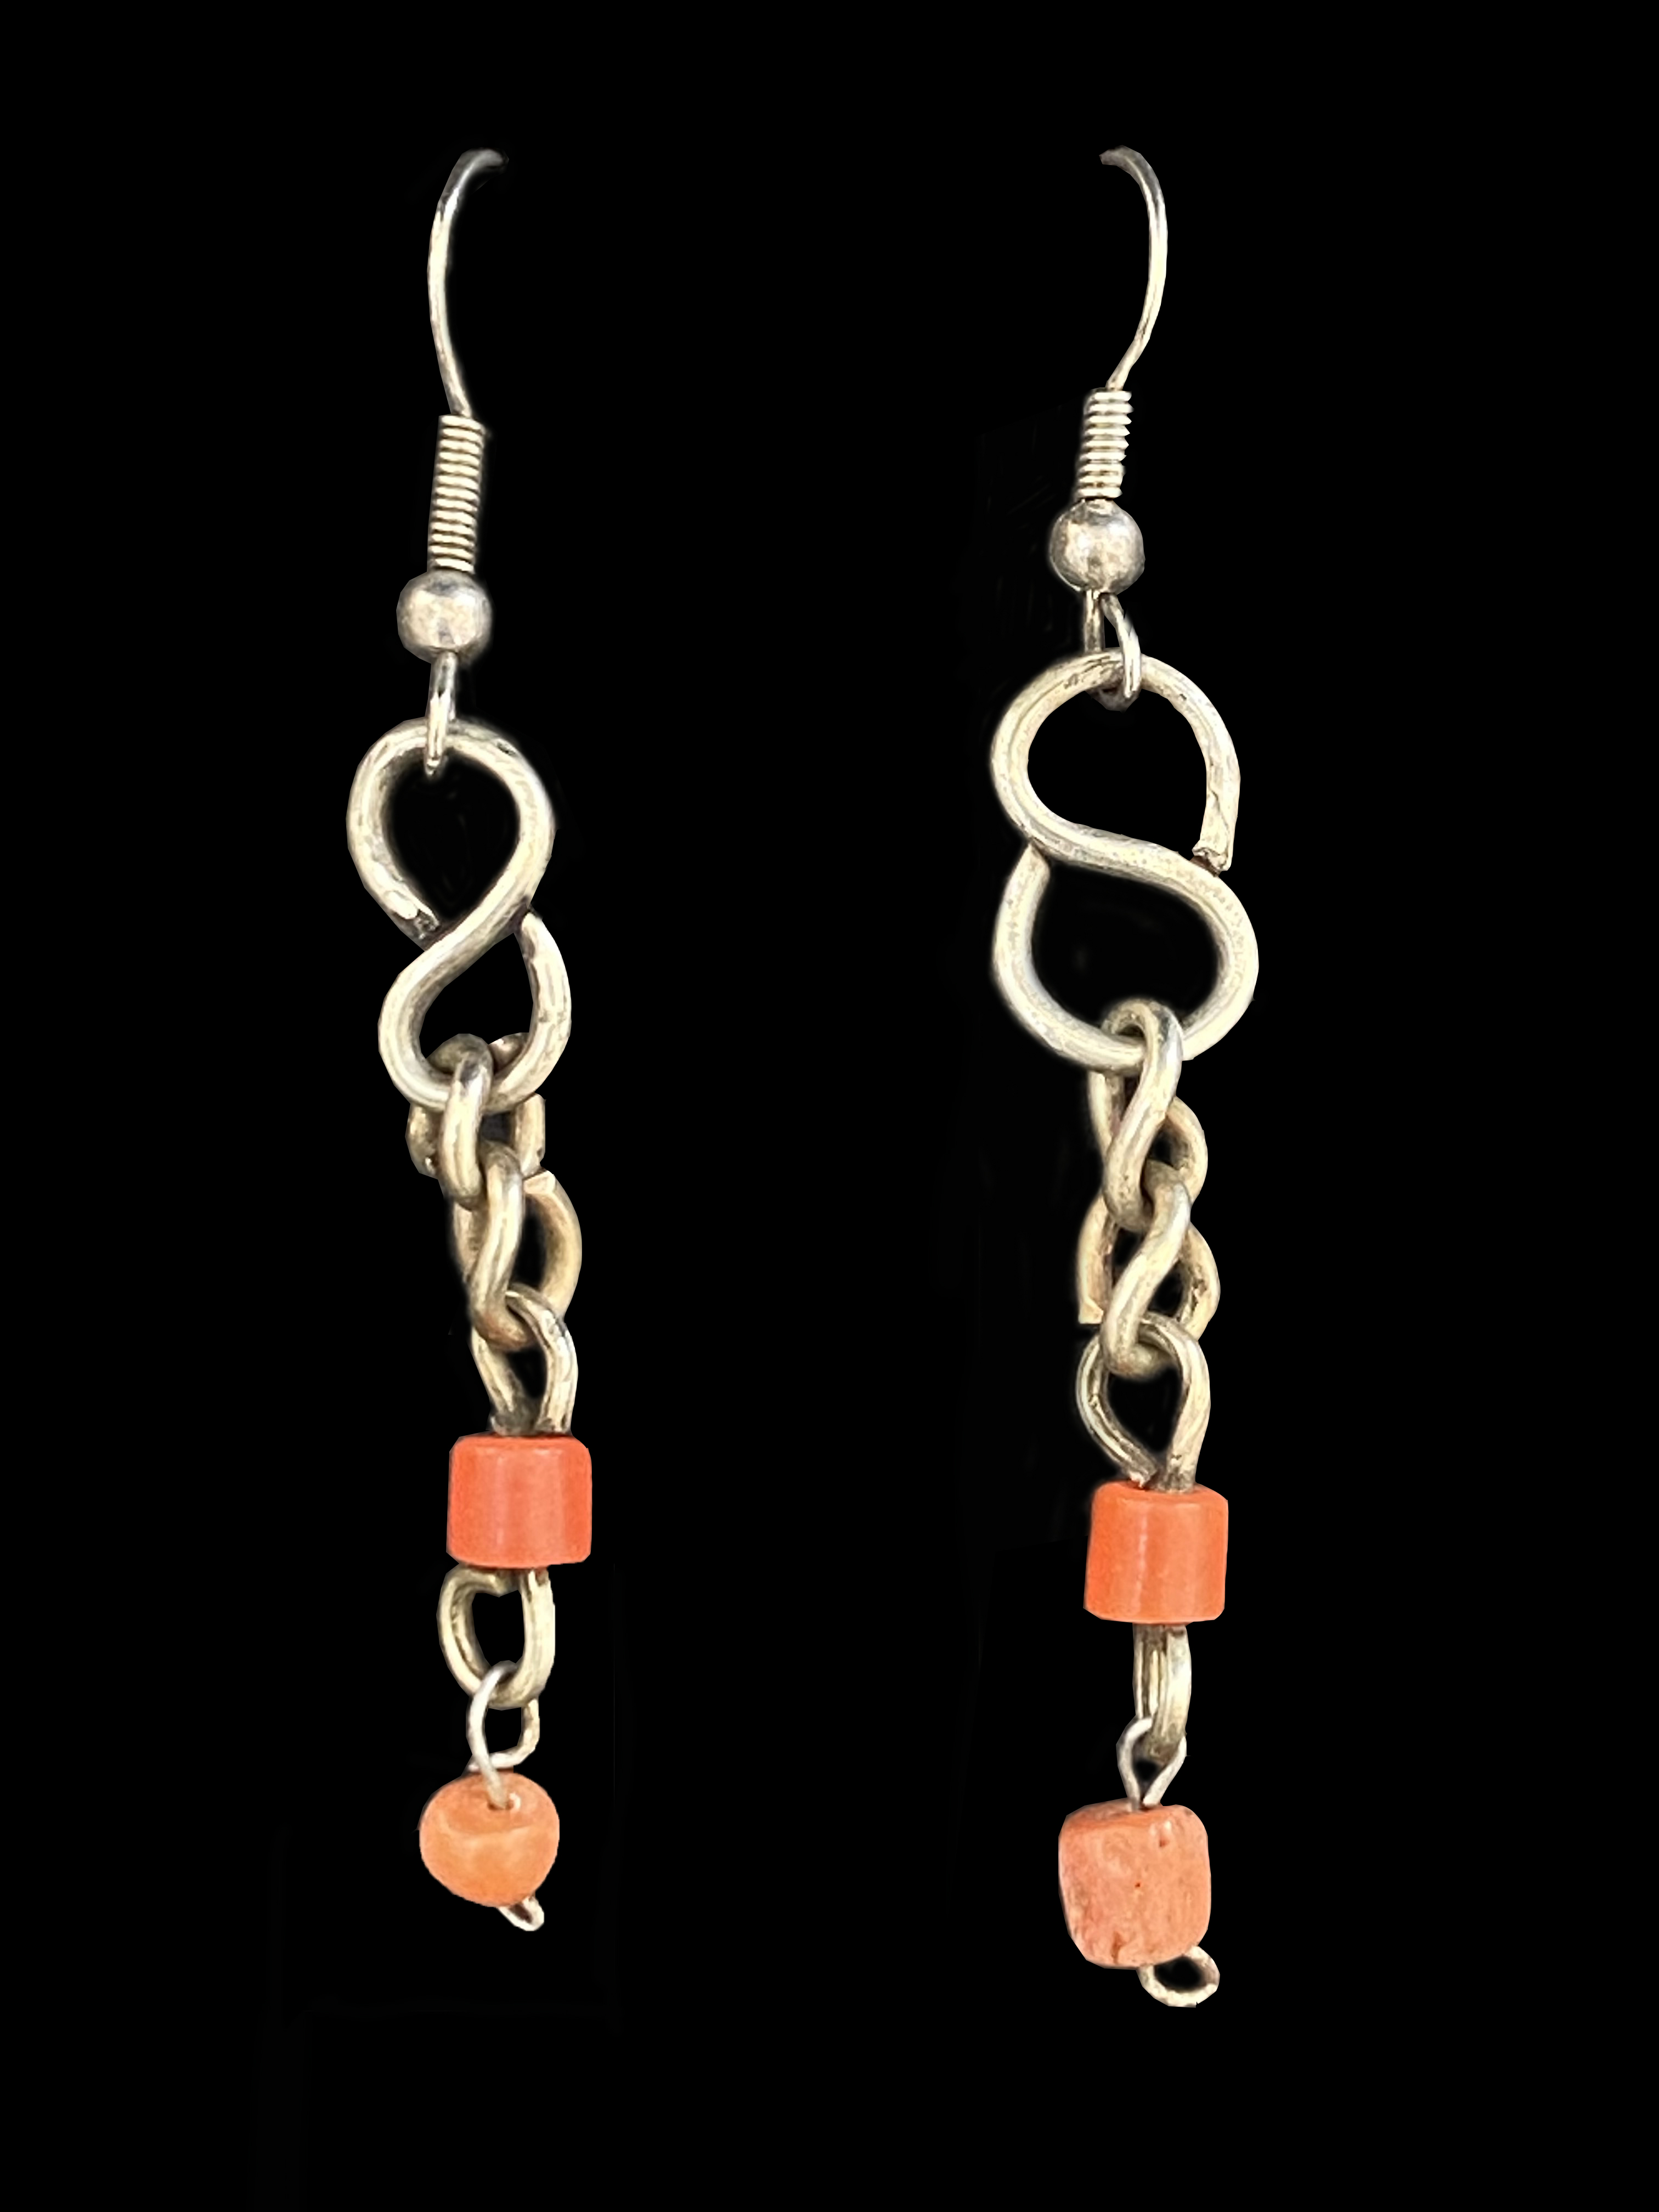 Old Chain Earrings - Morocco